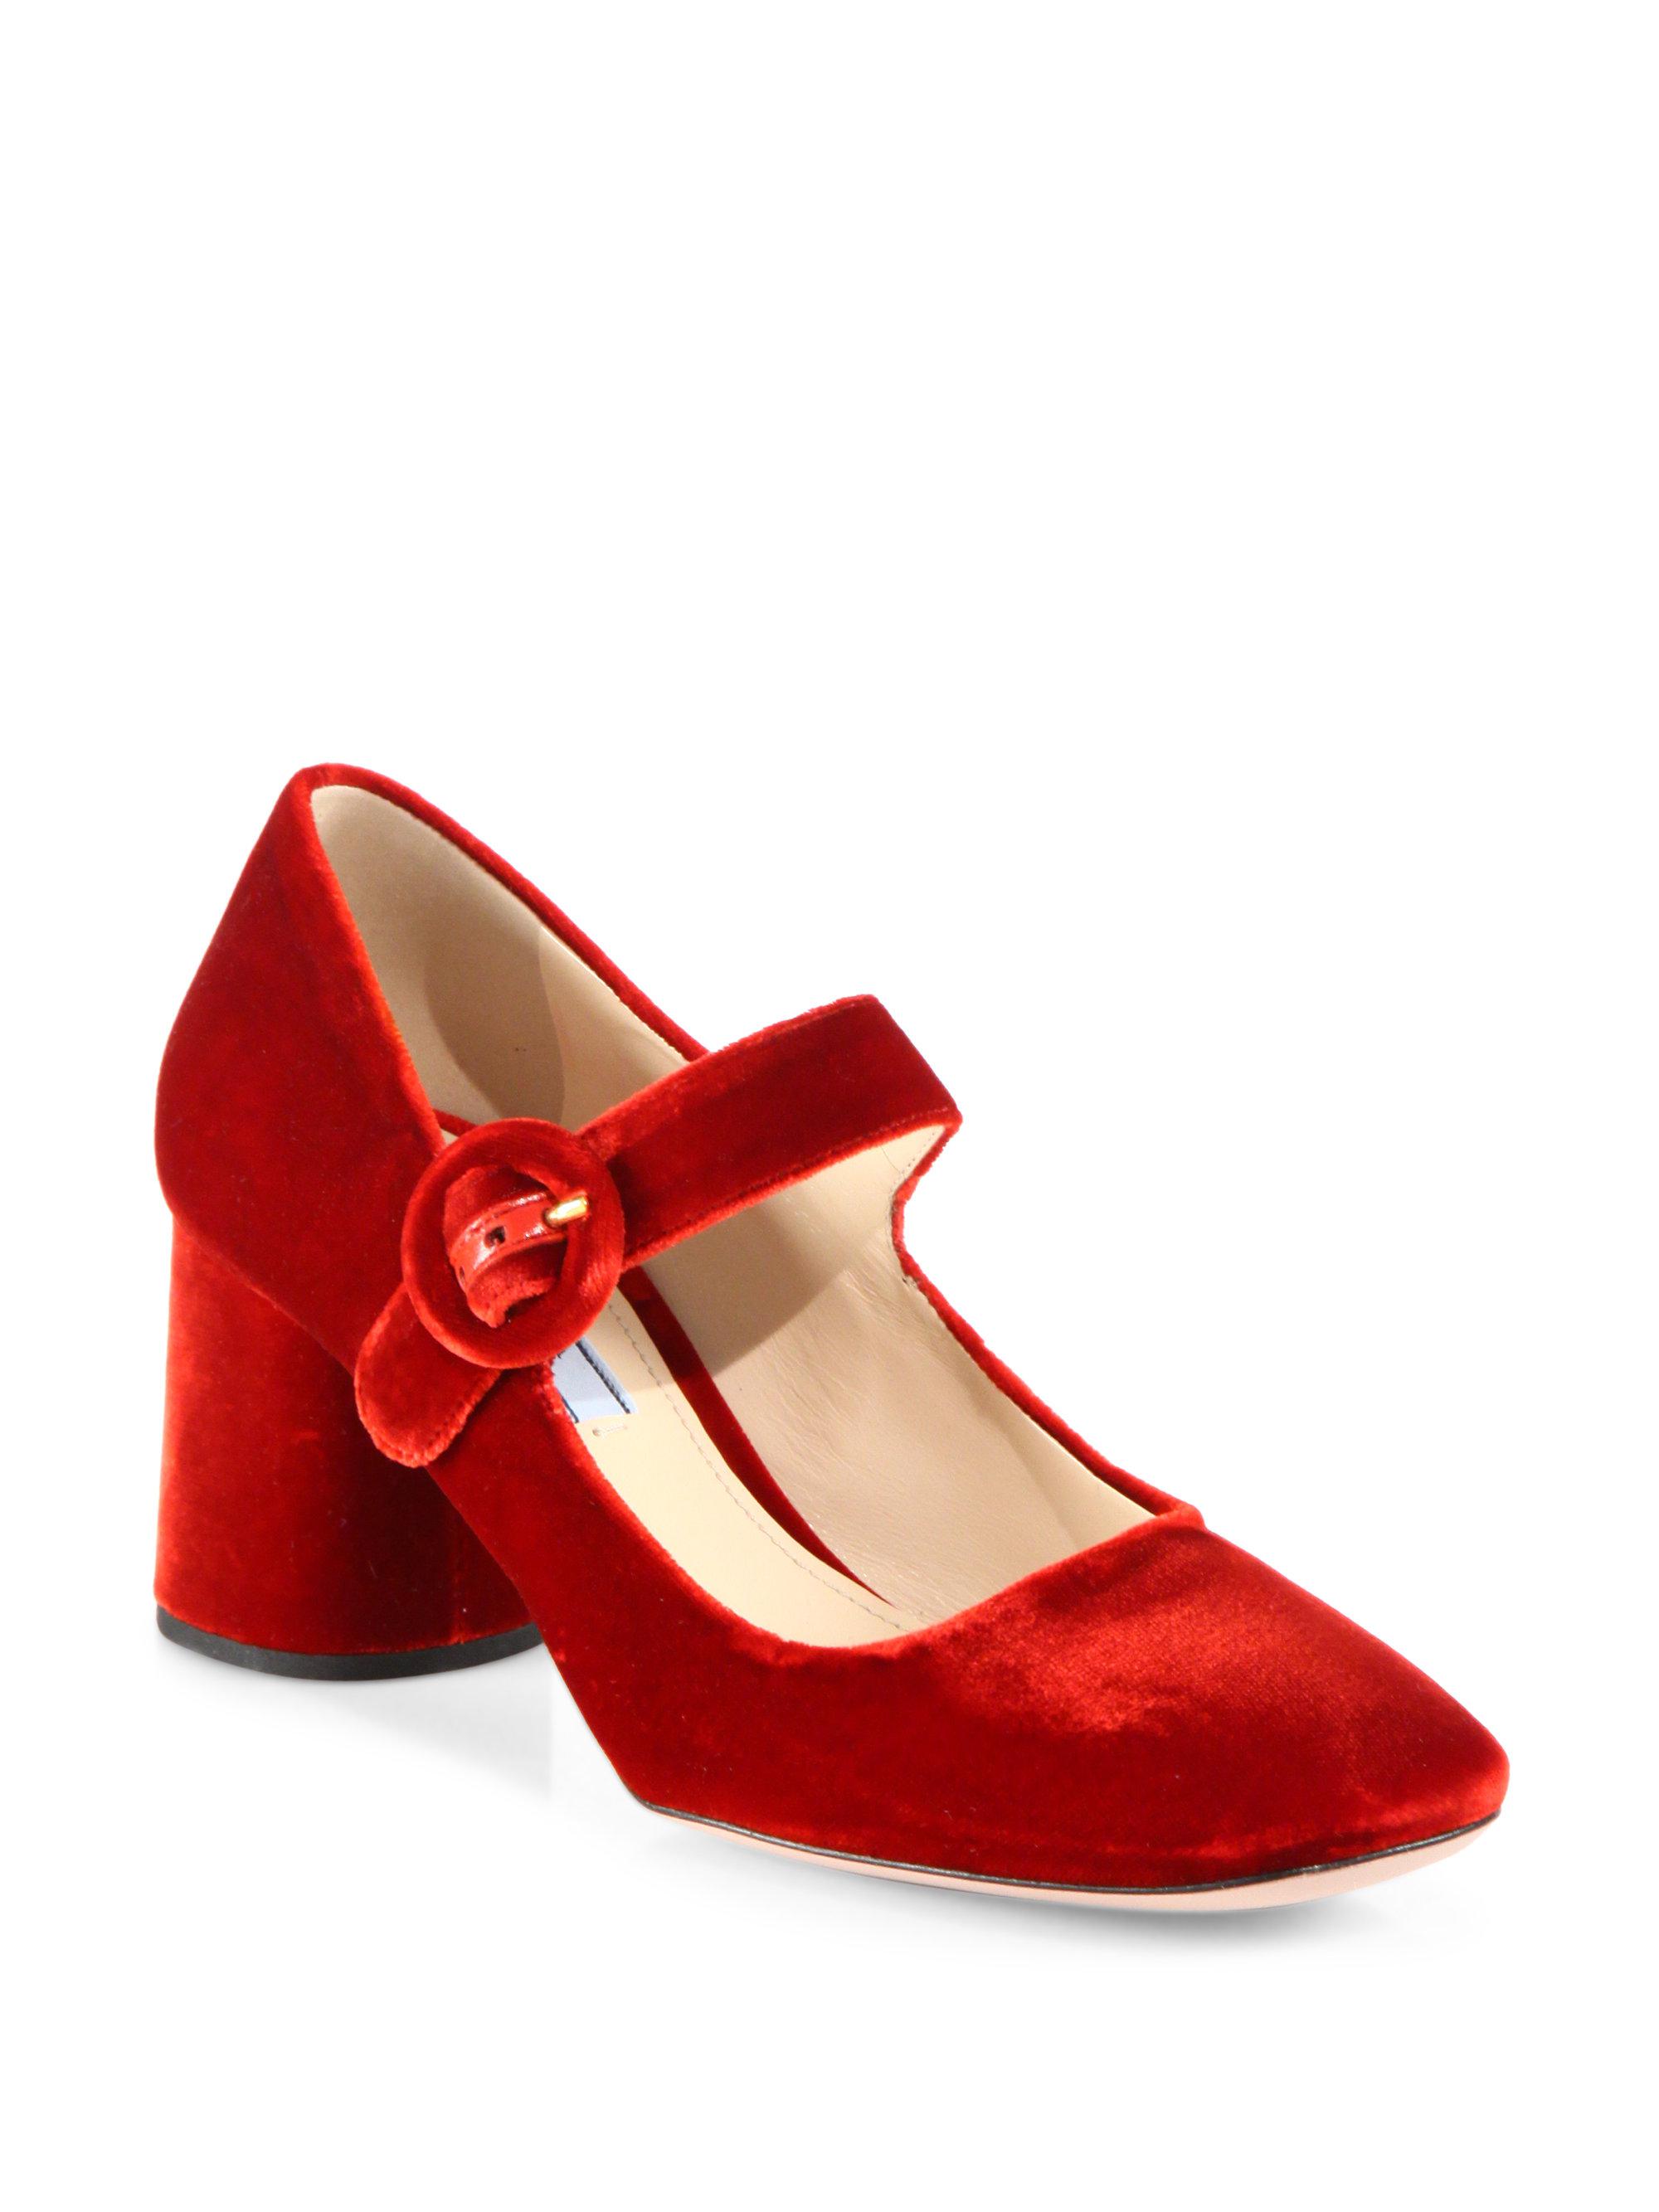 Prada Velvet Mary Jane Block Heel Pumps in Red | Lyst